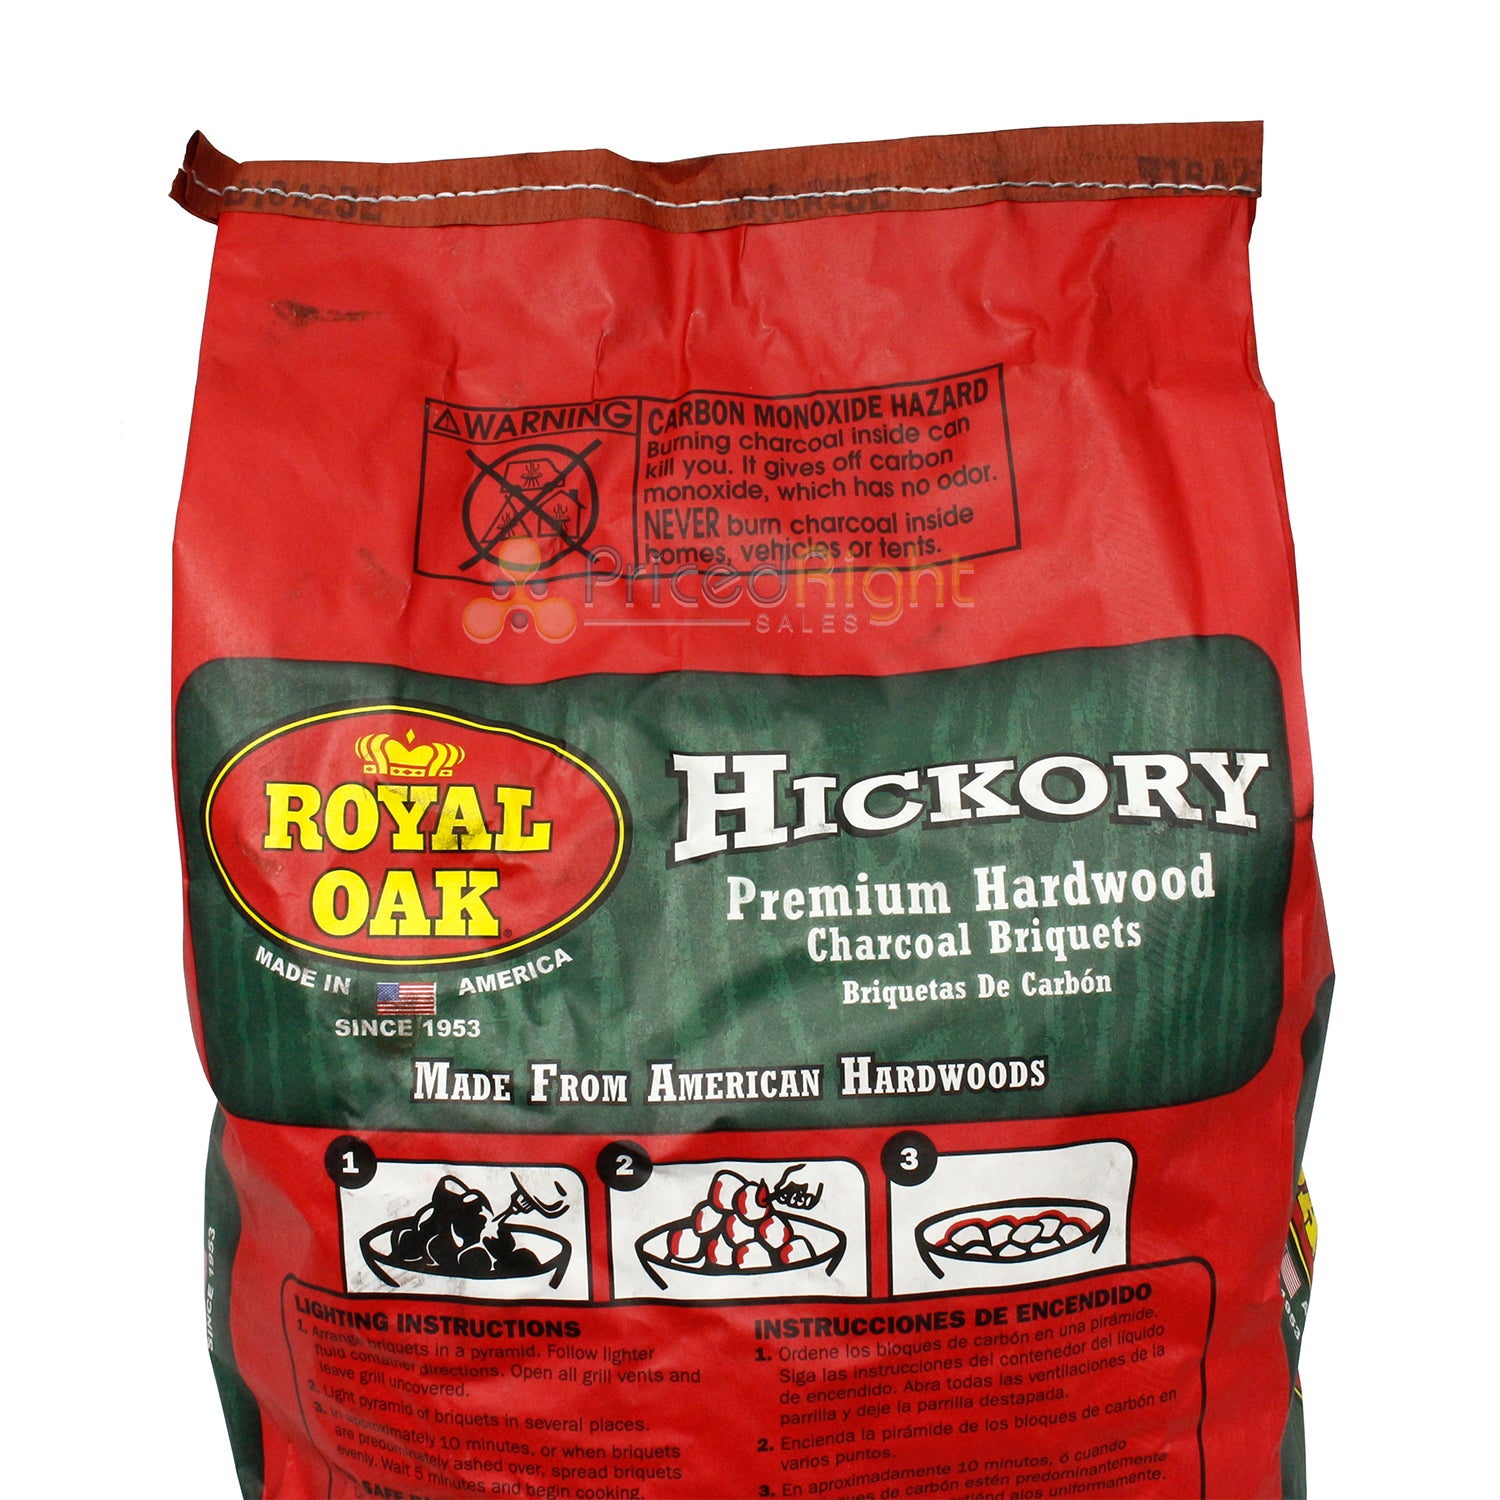 Royal Oak Hickory Charcoal Briquets Premium Hardwood Fast-Start Ridges 16.6 LB